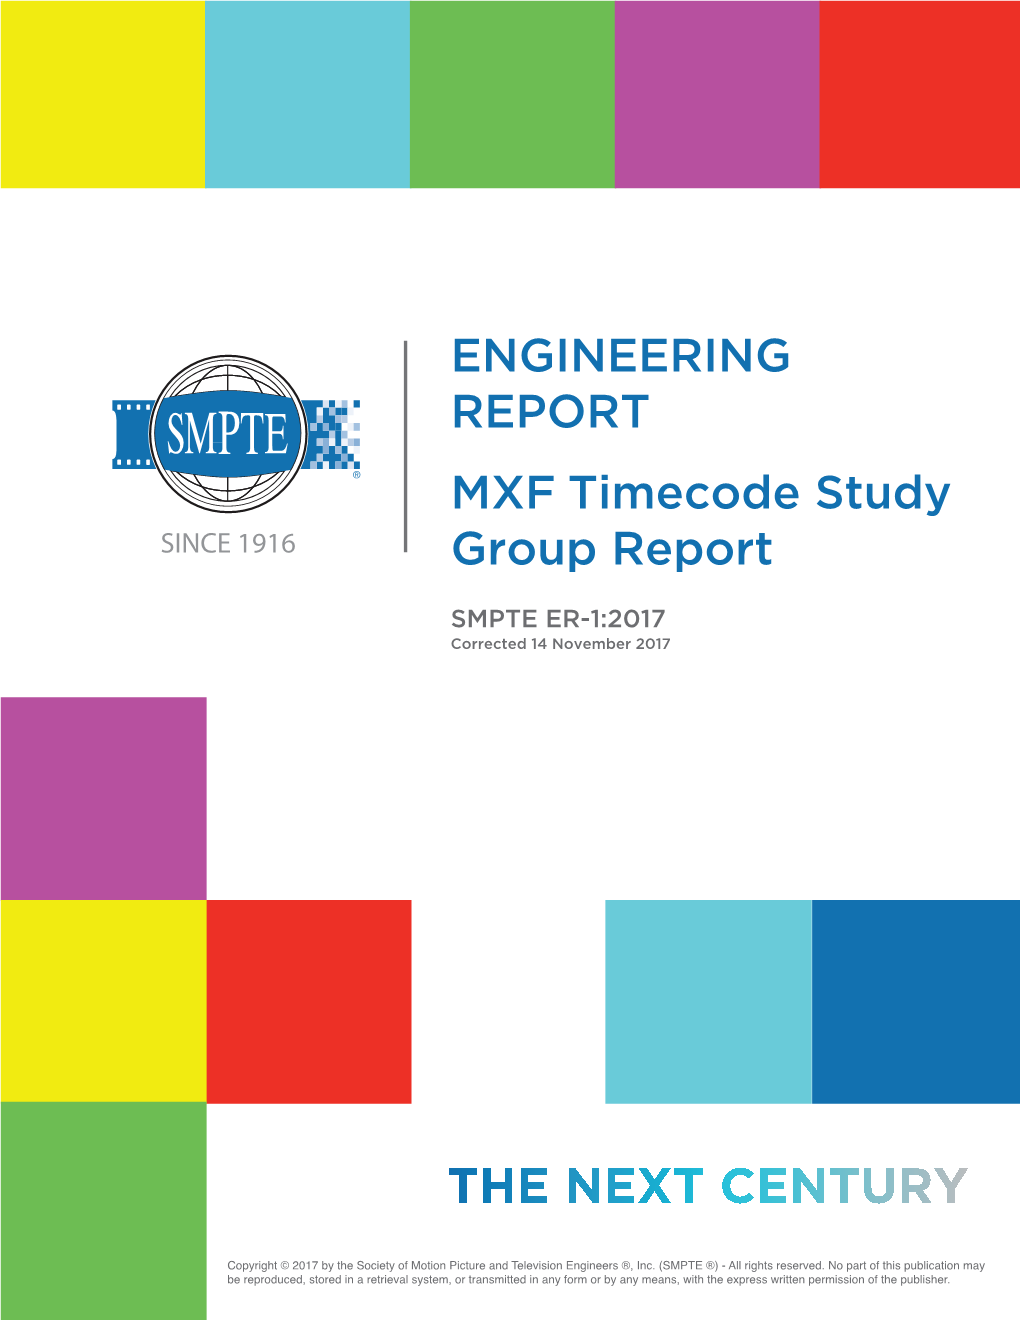 ENGINEERING REPORT MXF Timecode Study Group